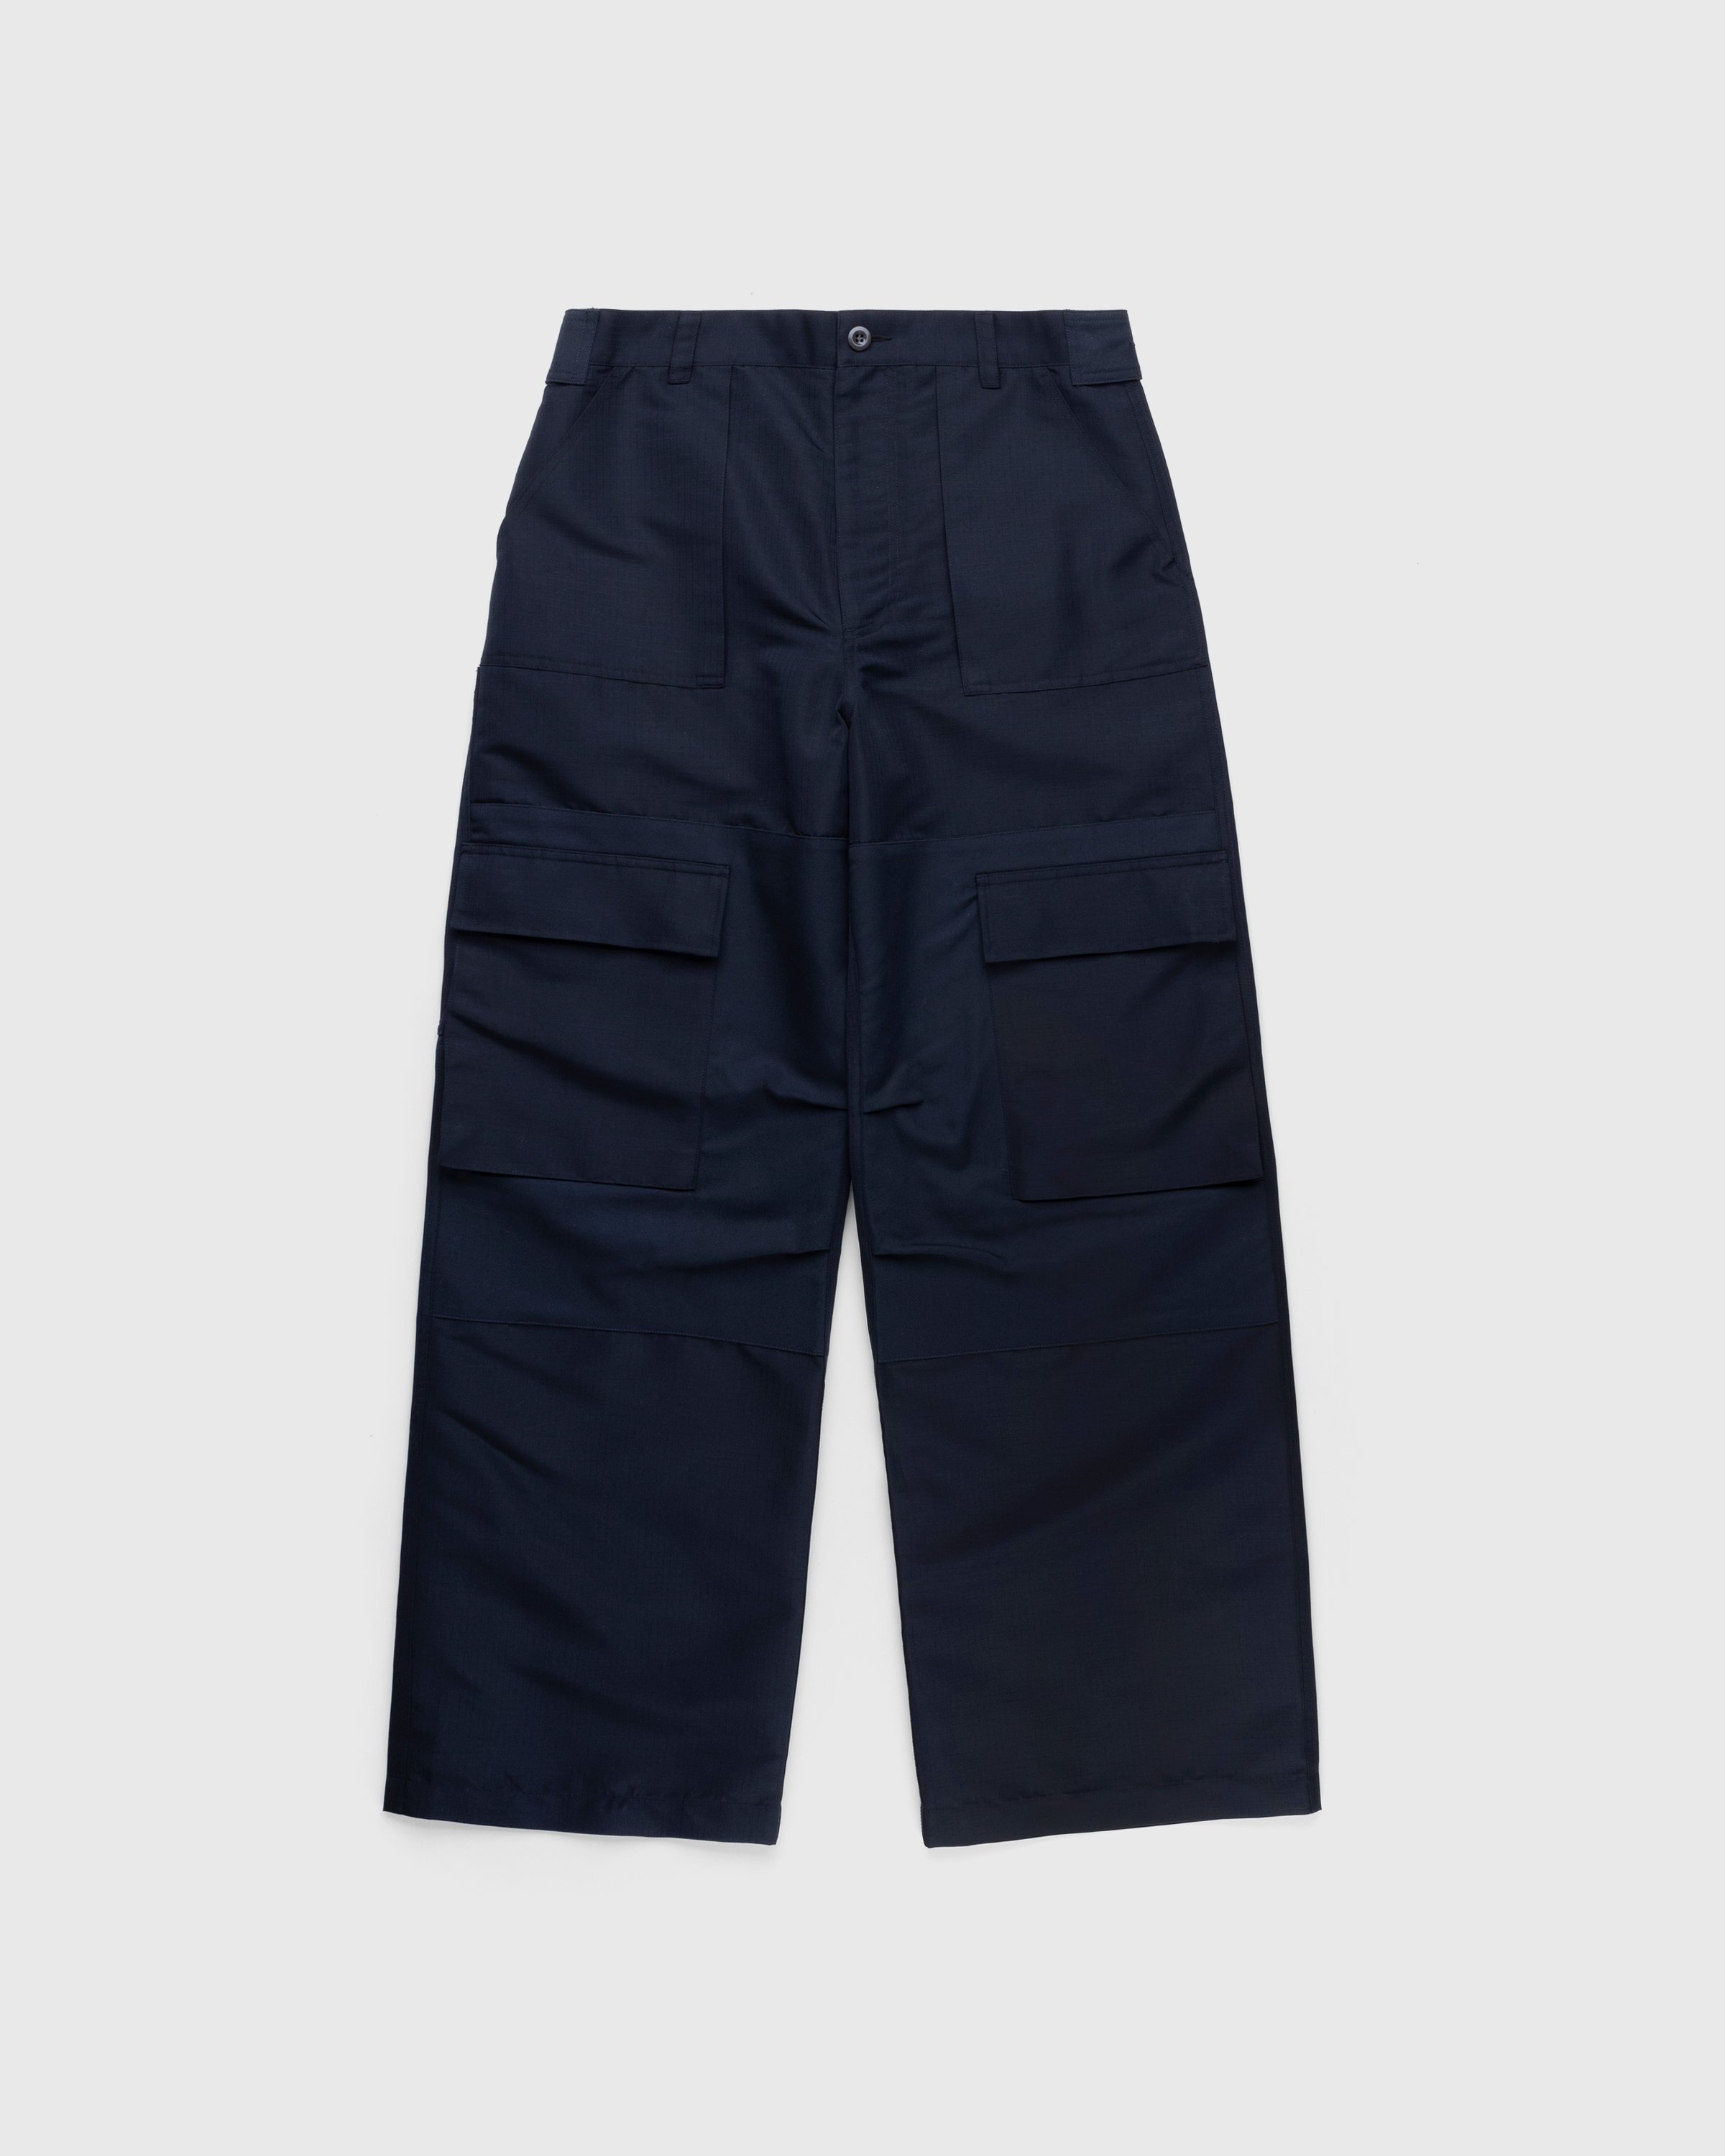 Acne Studios – Ripstop Cargo Trousers Dark Blue - Cargo Pants - Black - Image 1